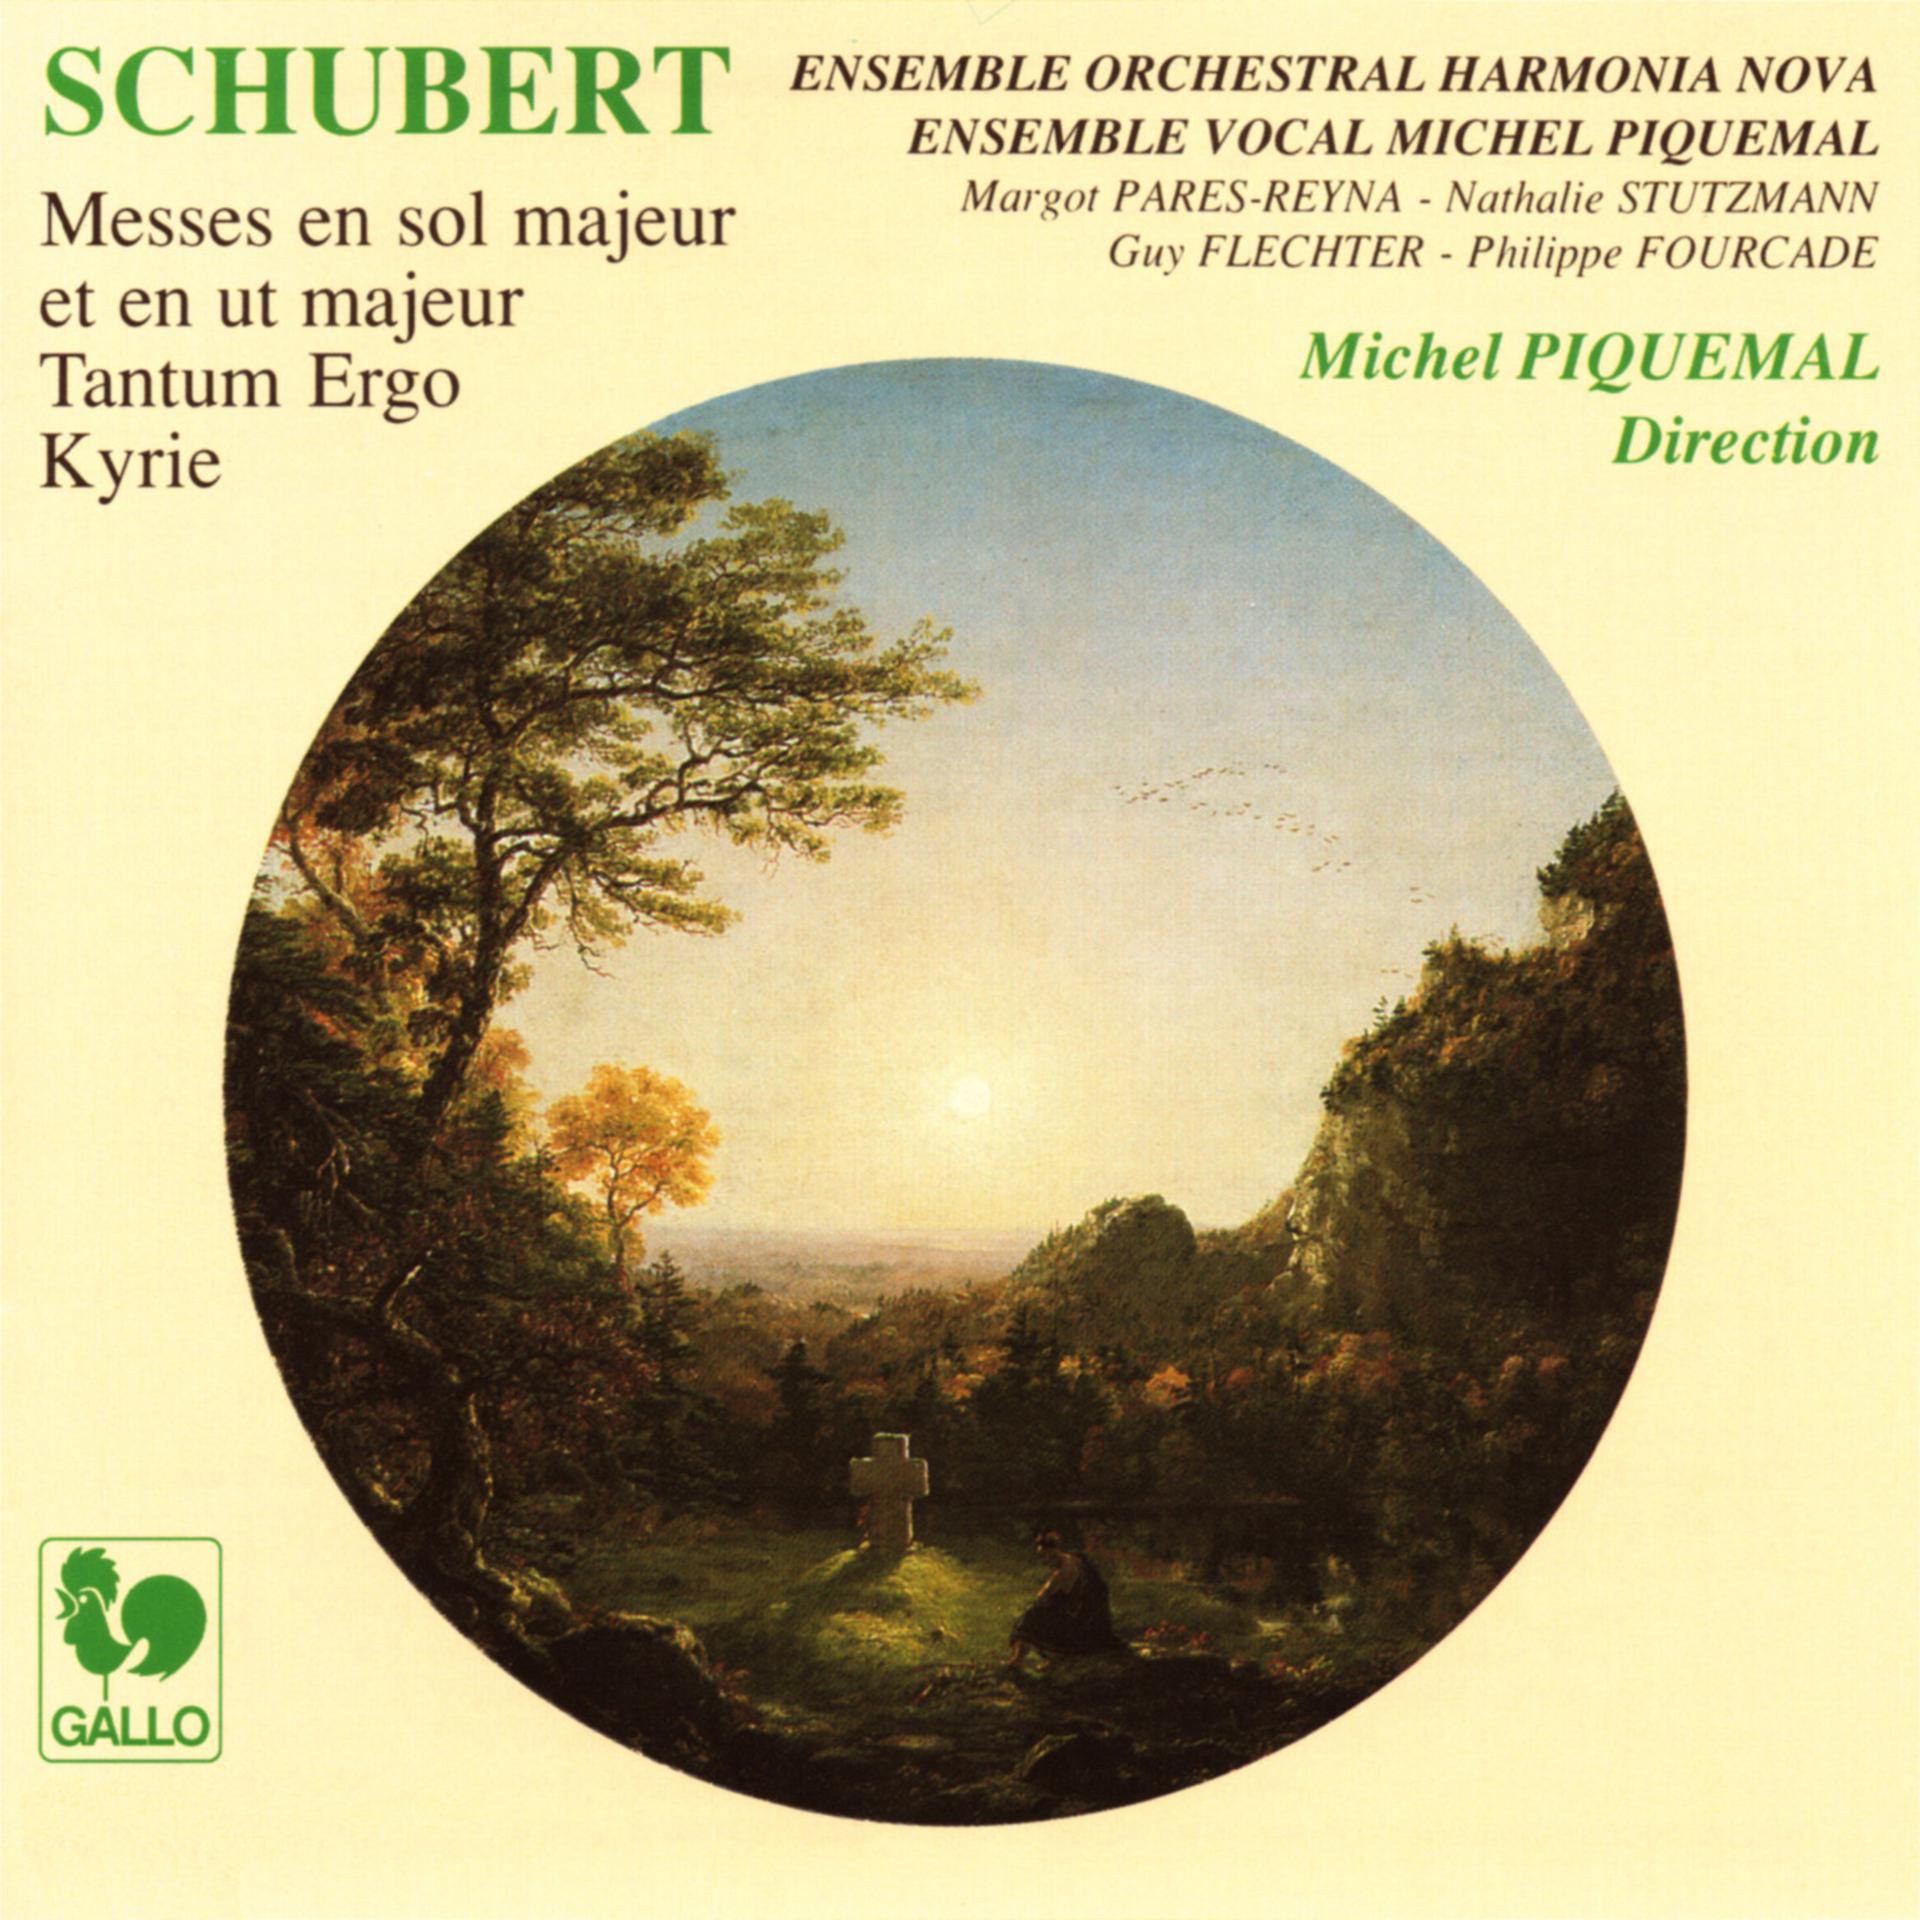 Постер альбома Schubert: Mass No. 2 in G Major, D. 167 - Kyrie in B-Flat Major, D. 45 - Tantum Ergo in C Major, D. 739 - Mass No. 4 in C Major, D. 452